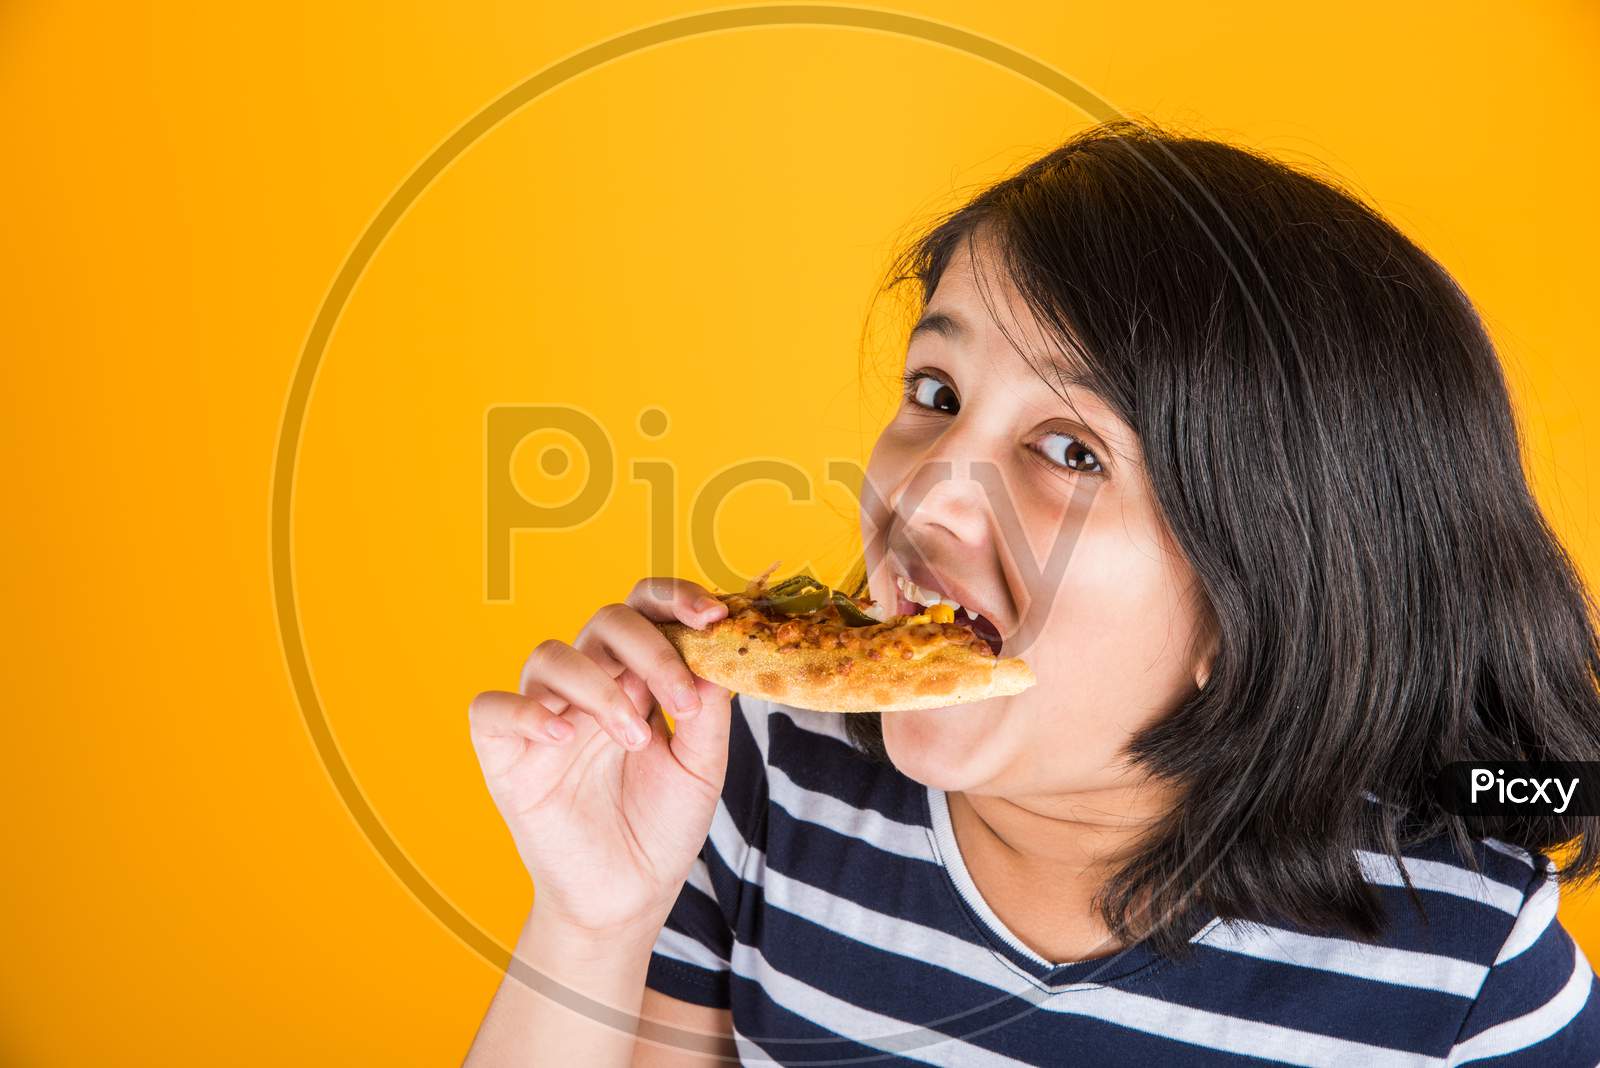 Cute little girl eating pizza